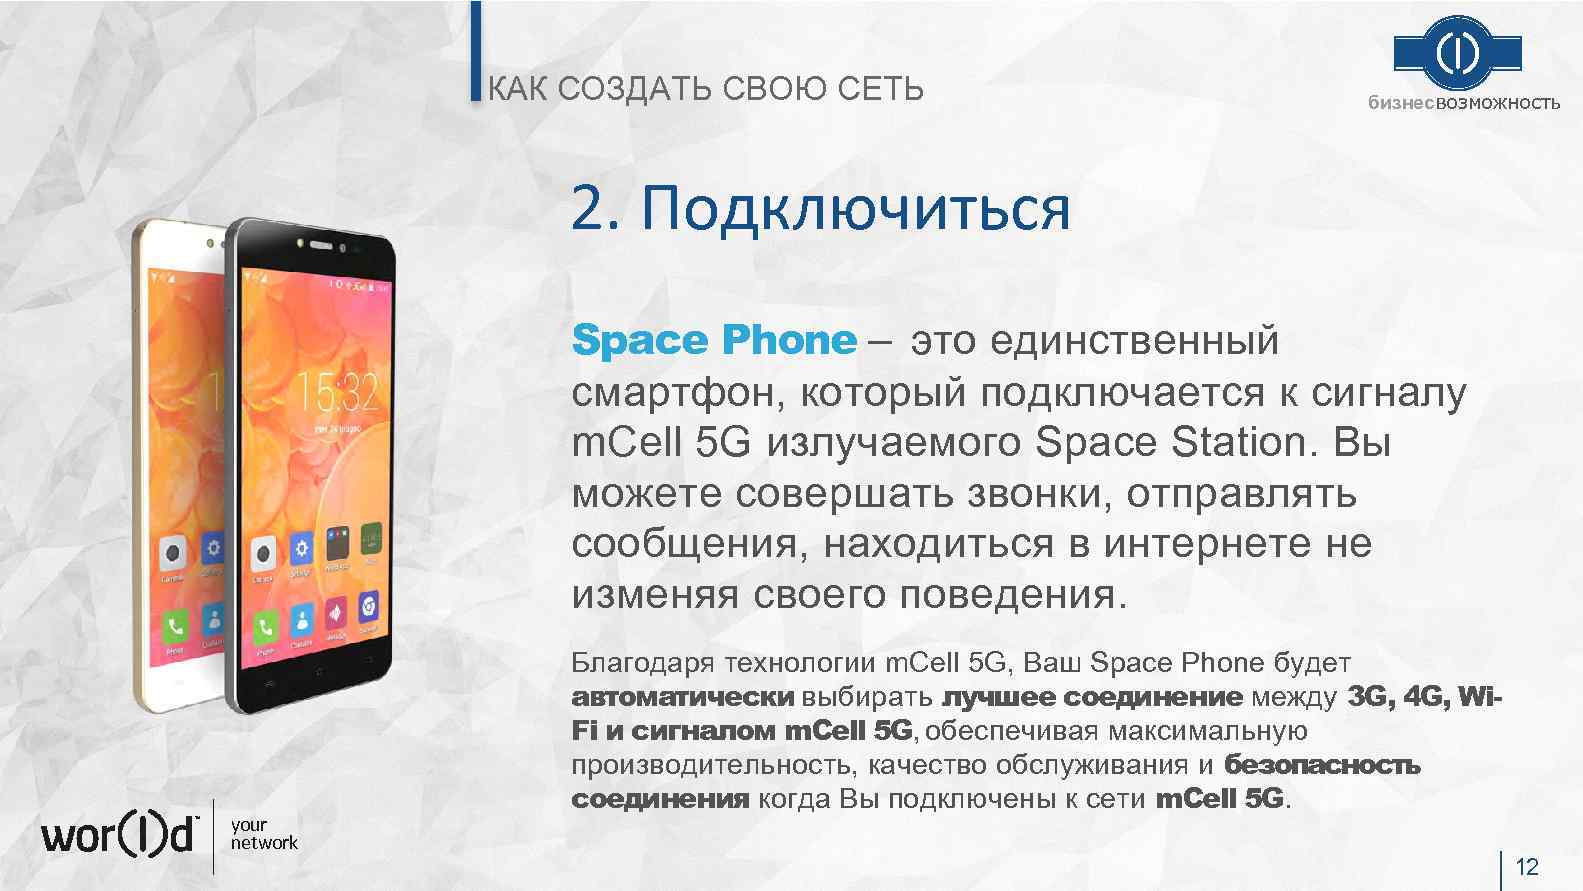 Phone space что это за приложение. World Space Phone. Space Phone 5g. World Space Phone 5g. Space fone.